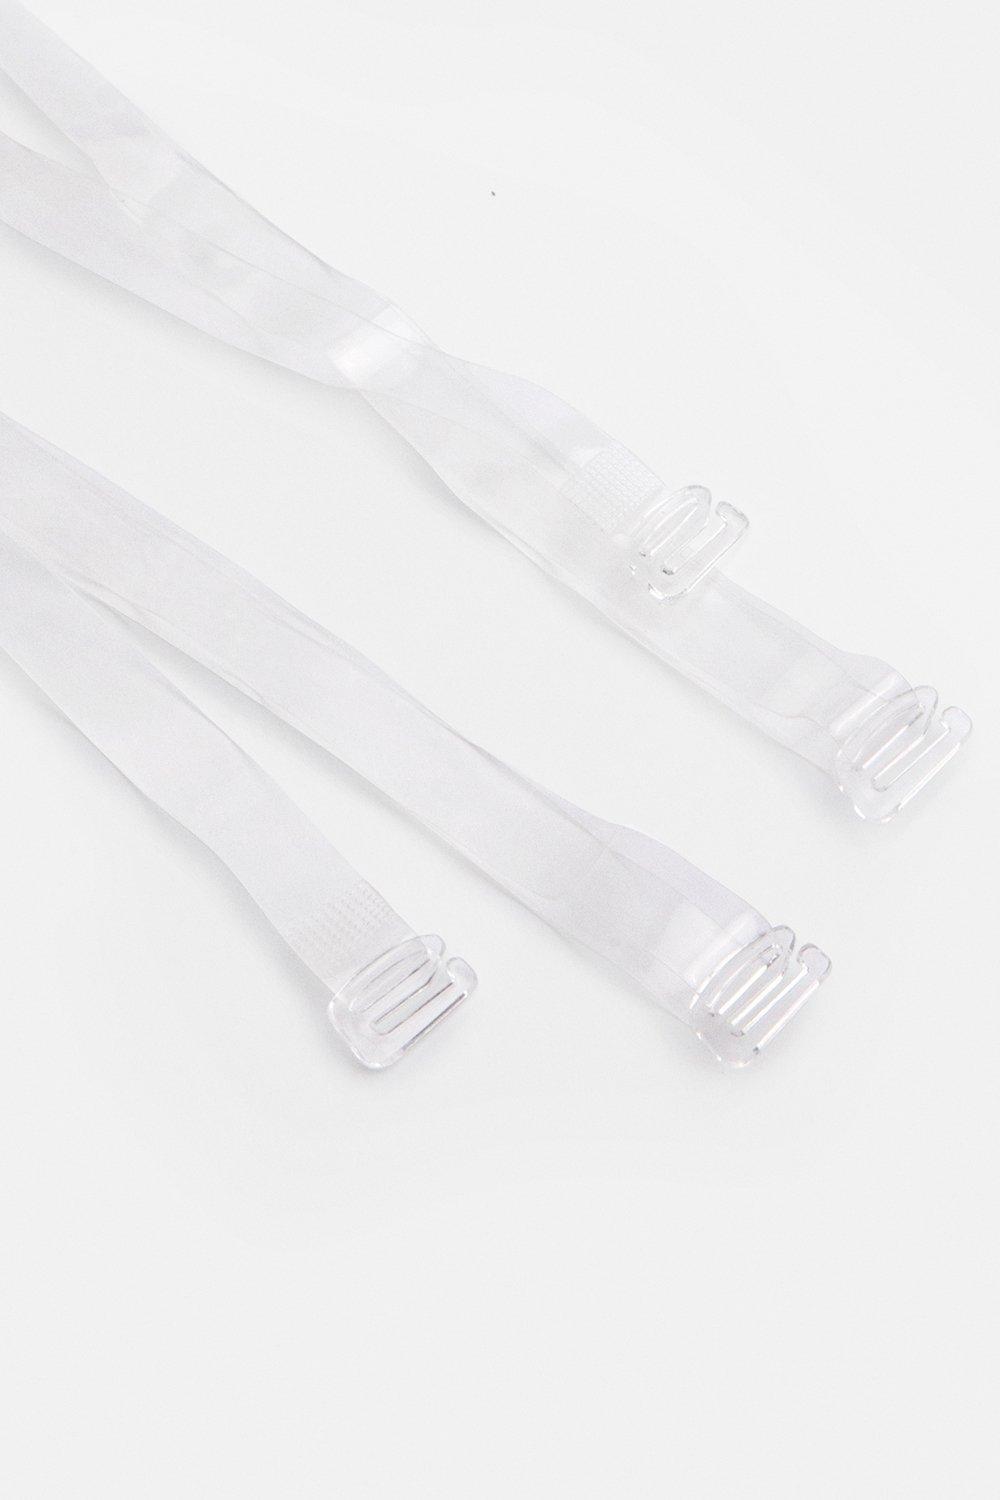 Bra STRAPS Removable Straps Transparent Silicone Adjustable